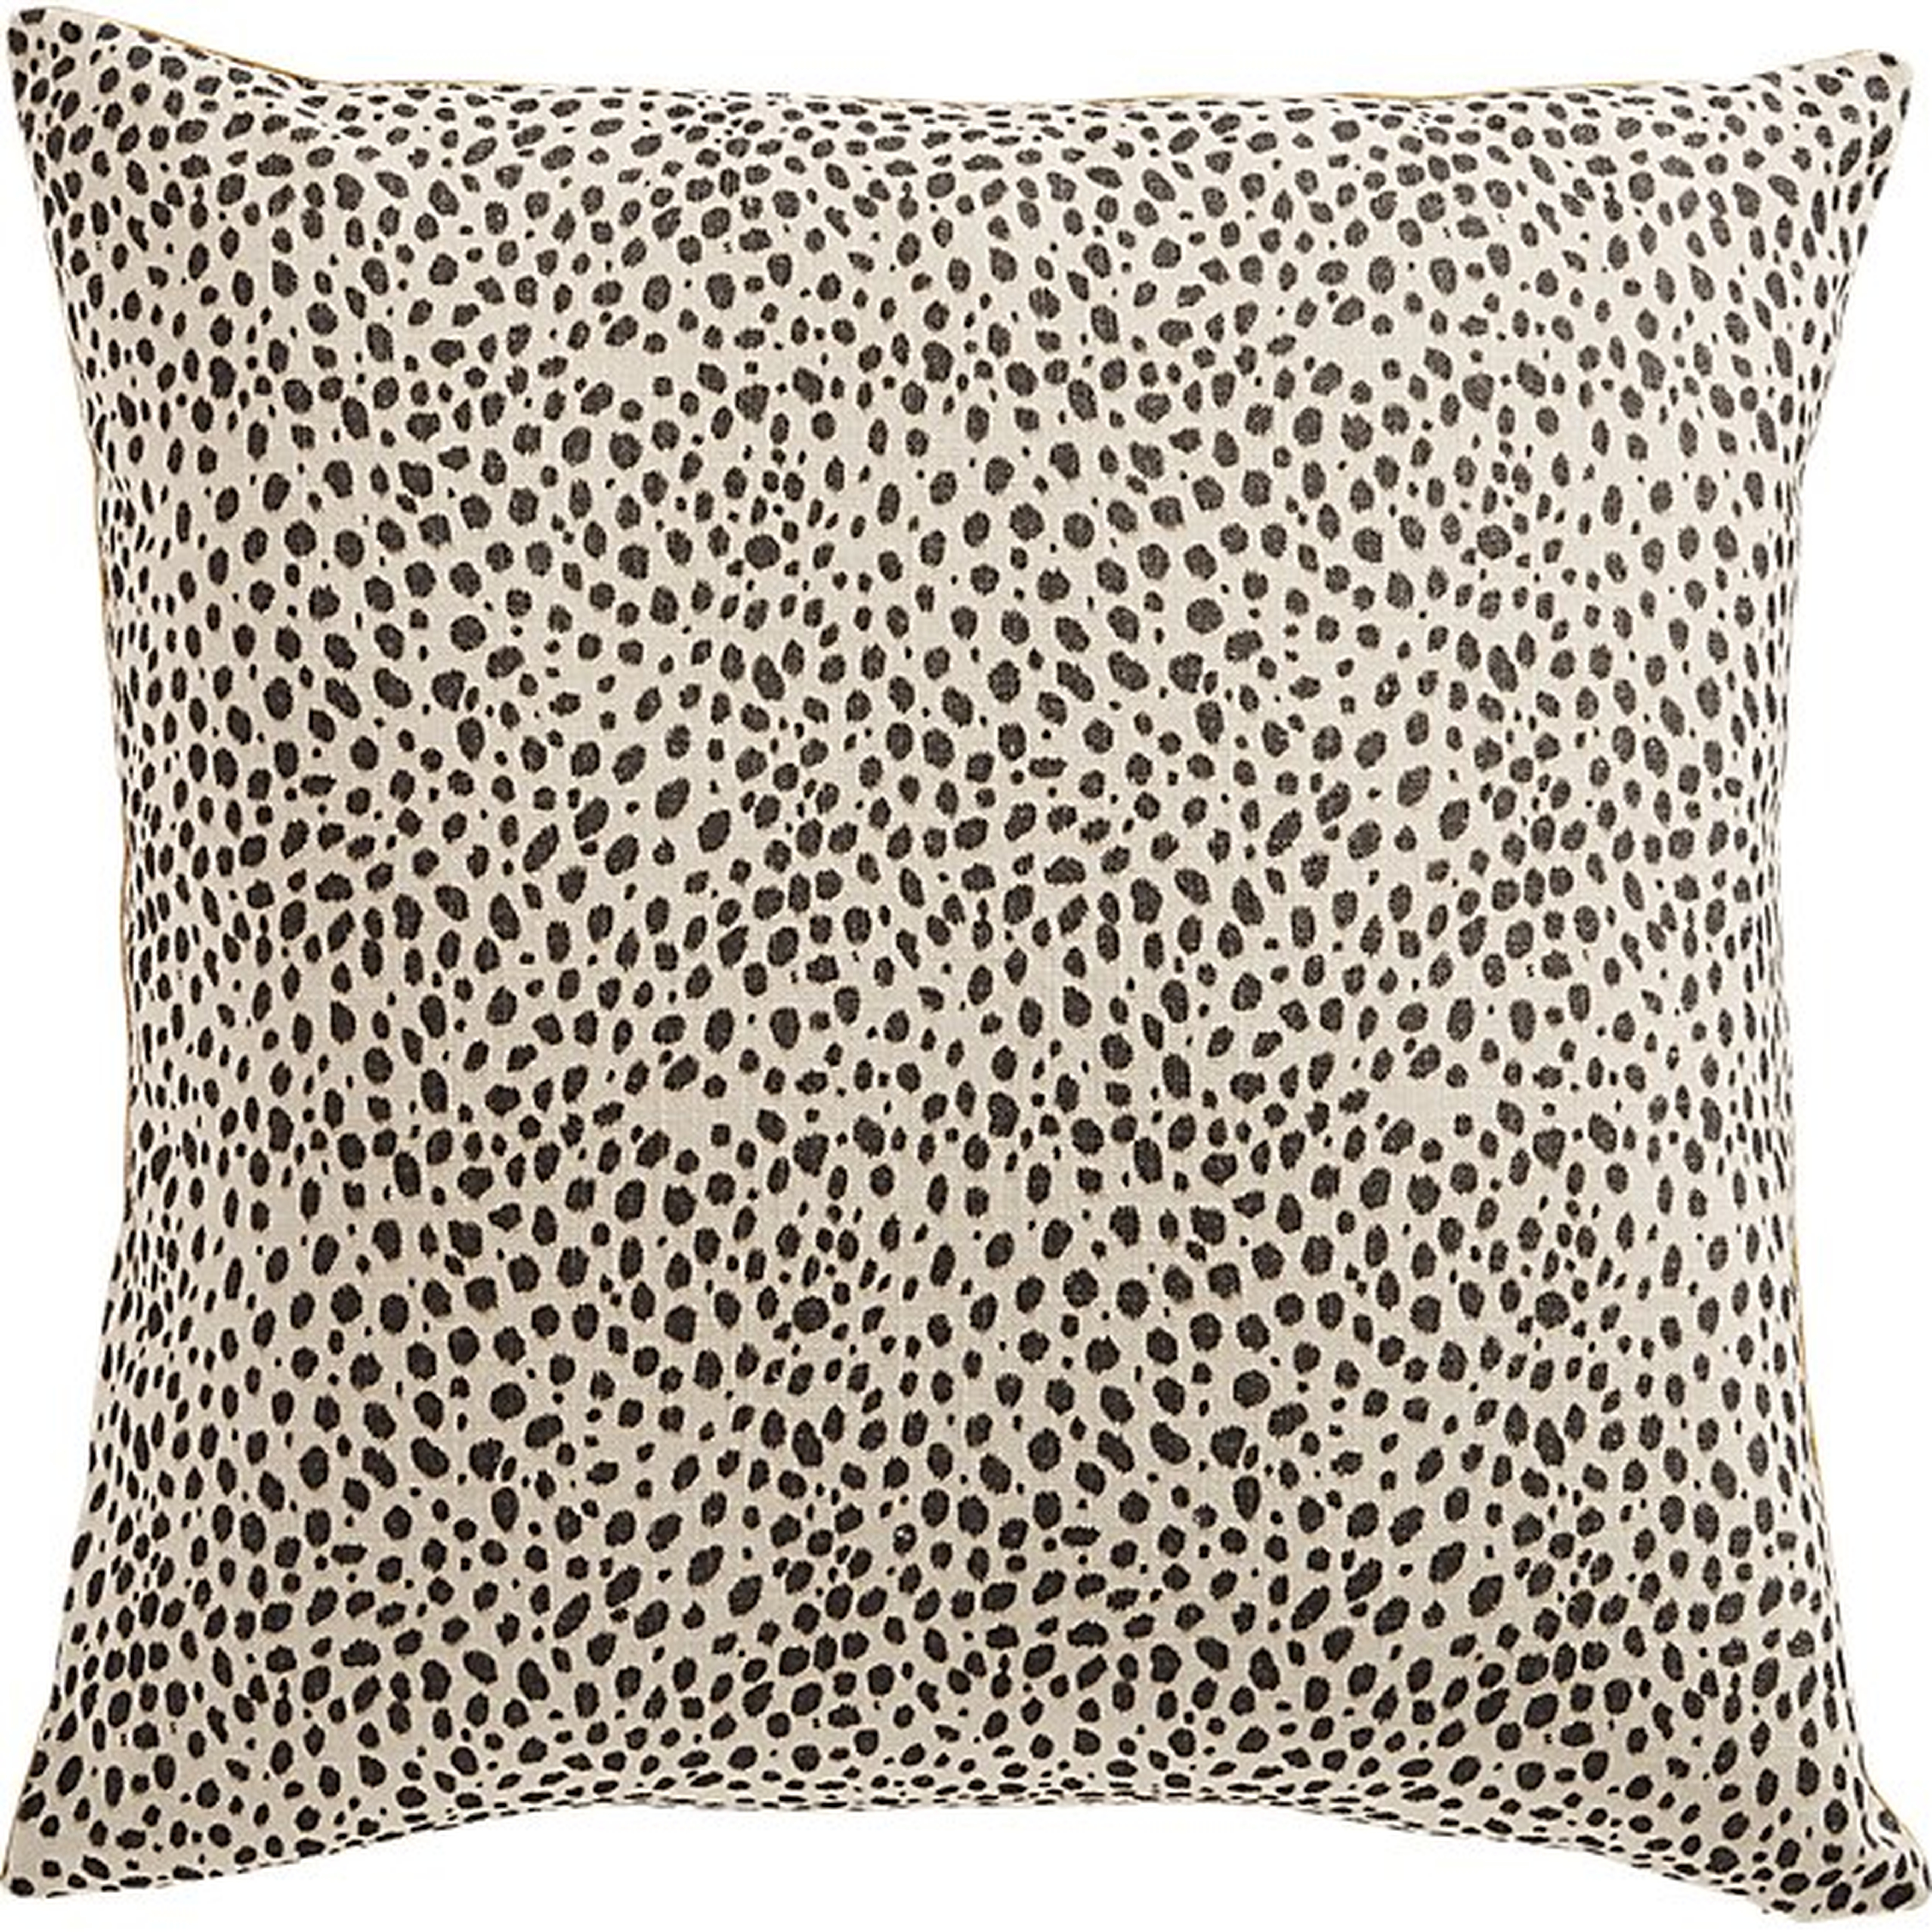 Nahla Cheetah Pillow with Down-Alternative Insert, 20" x 20" - CB2